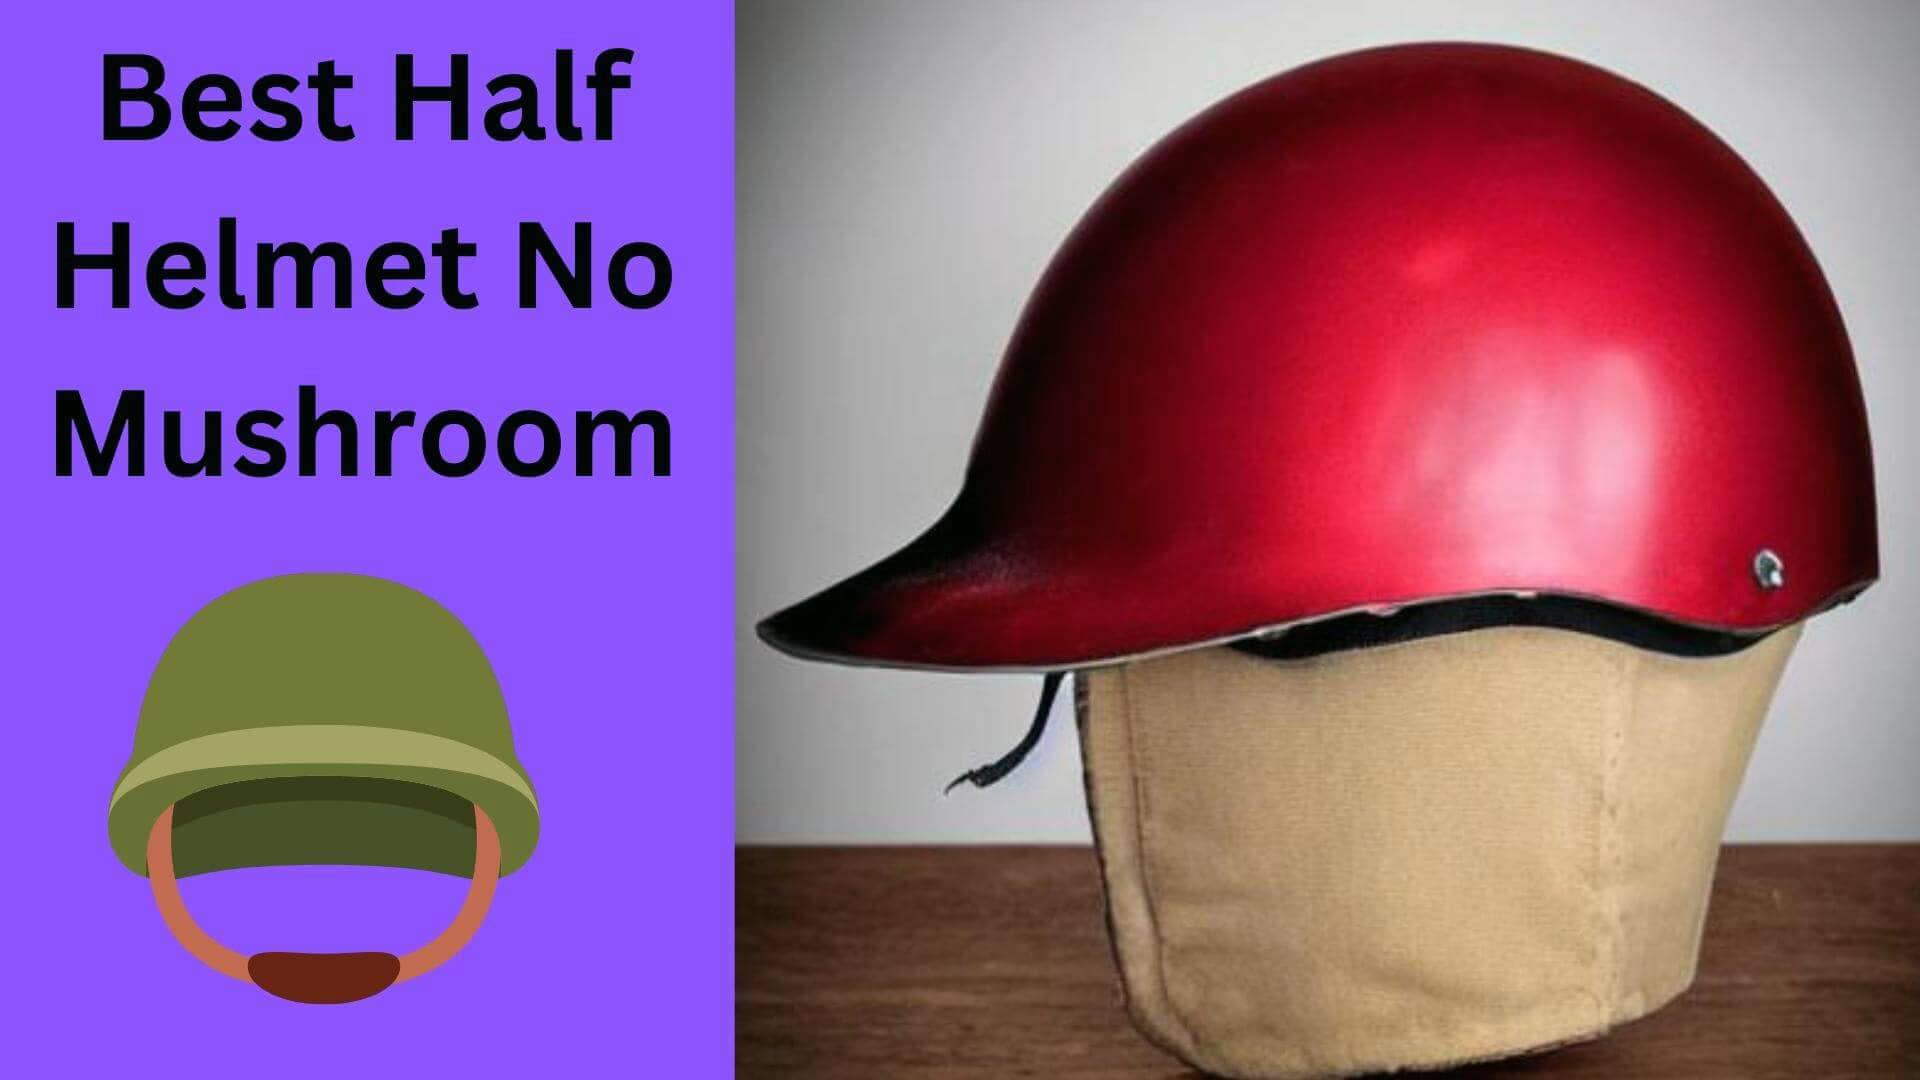 The 10 Best Half Helmet No Mushroom to Protect Your Head!